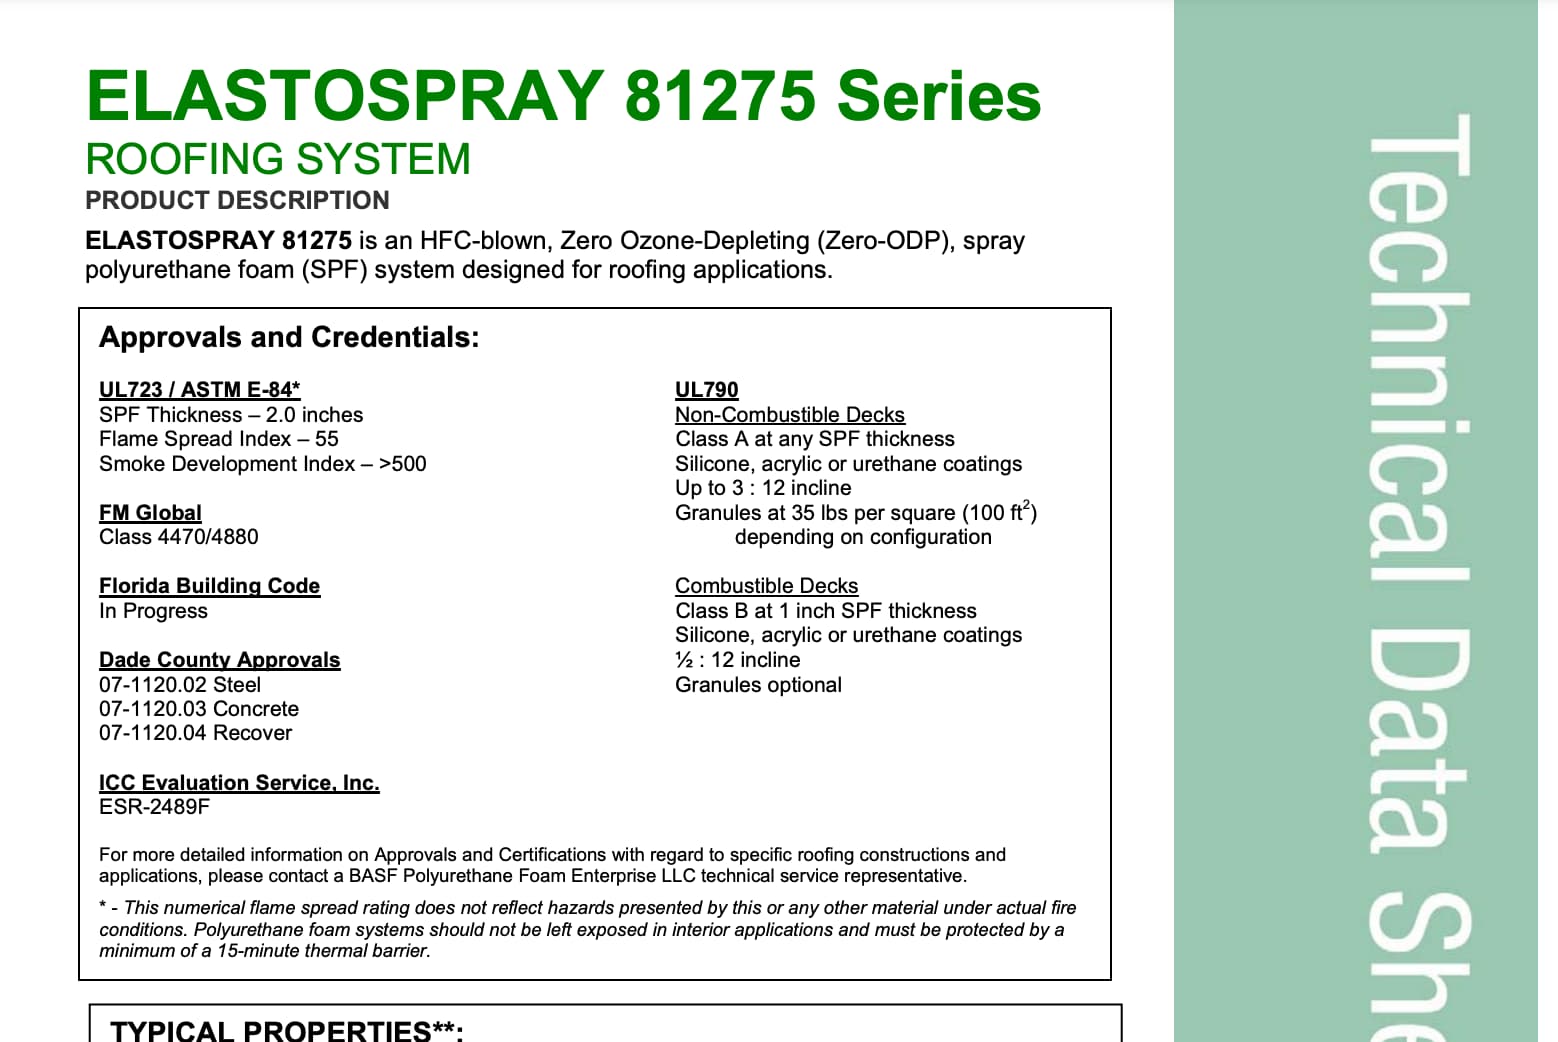 Base Elastrospray 81275 series technical information cover photo